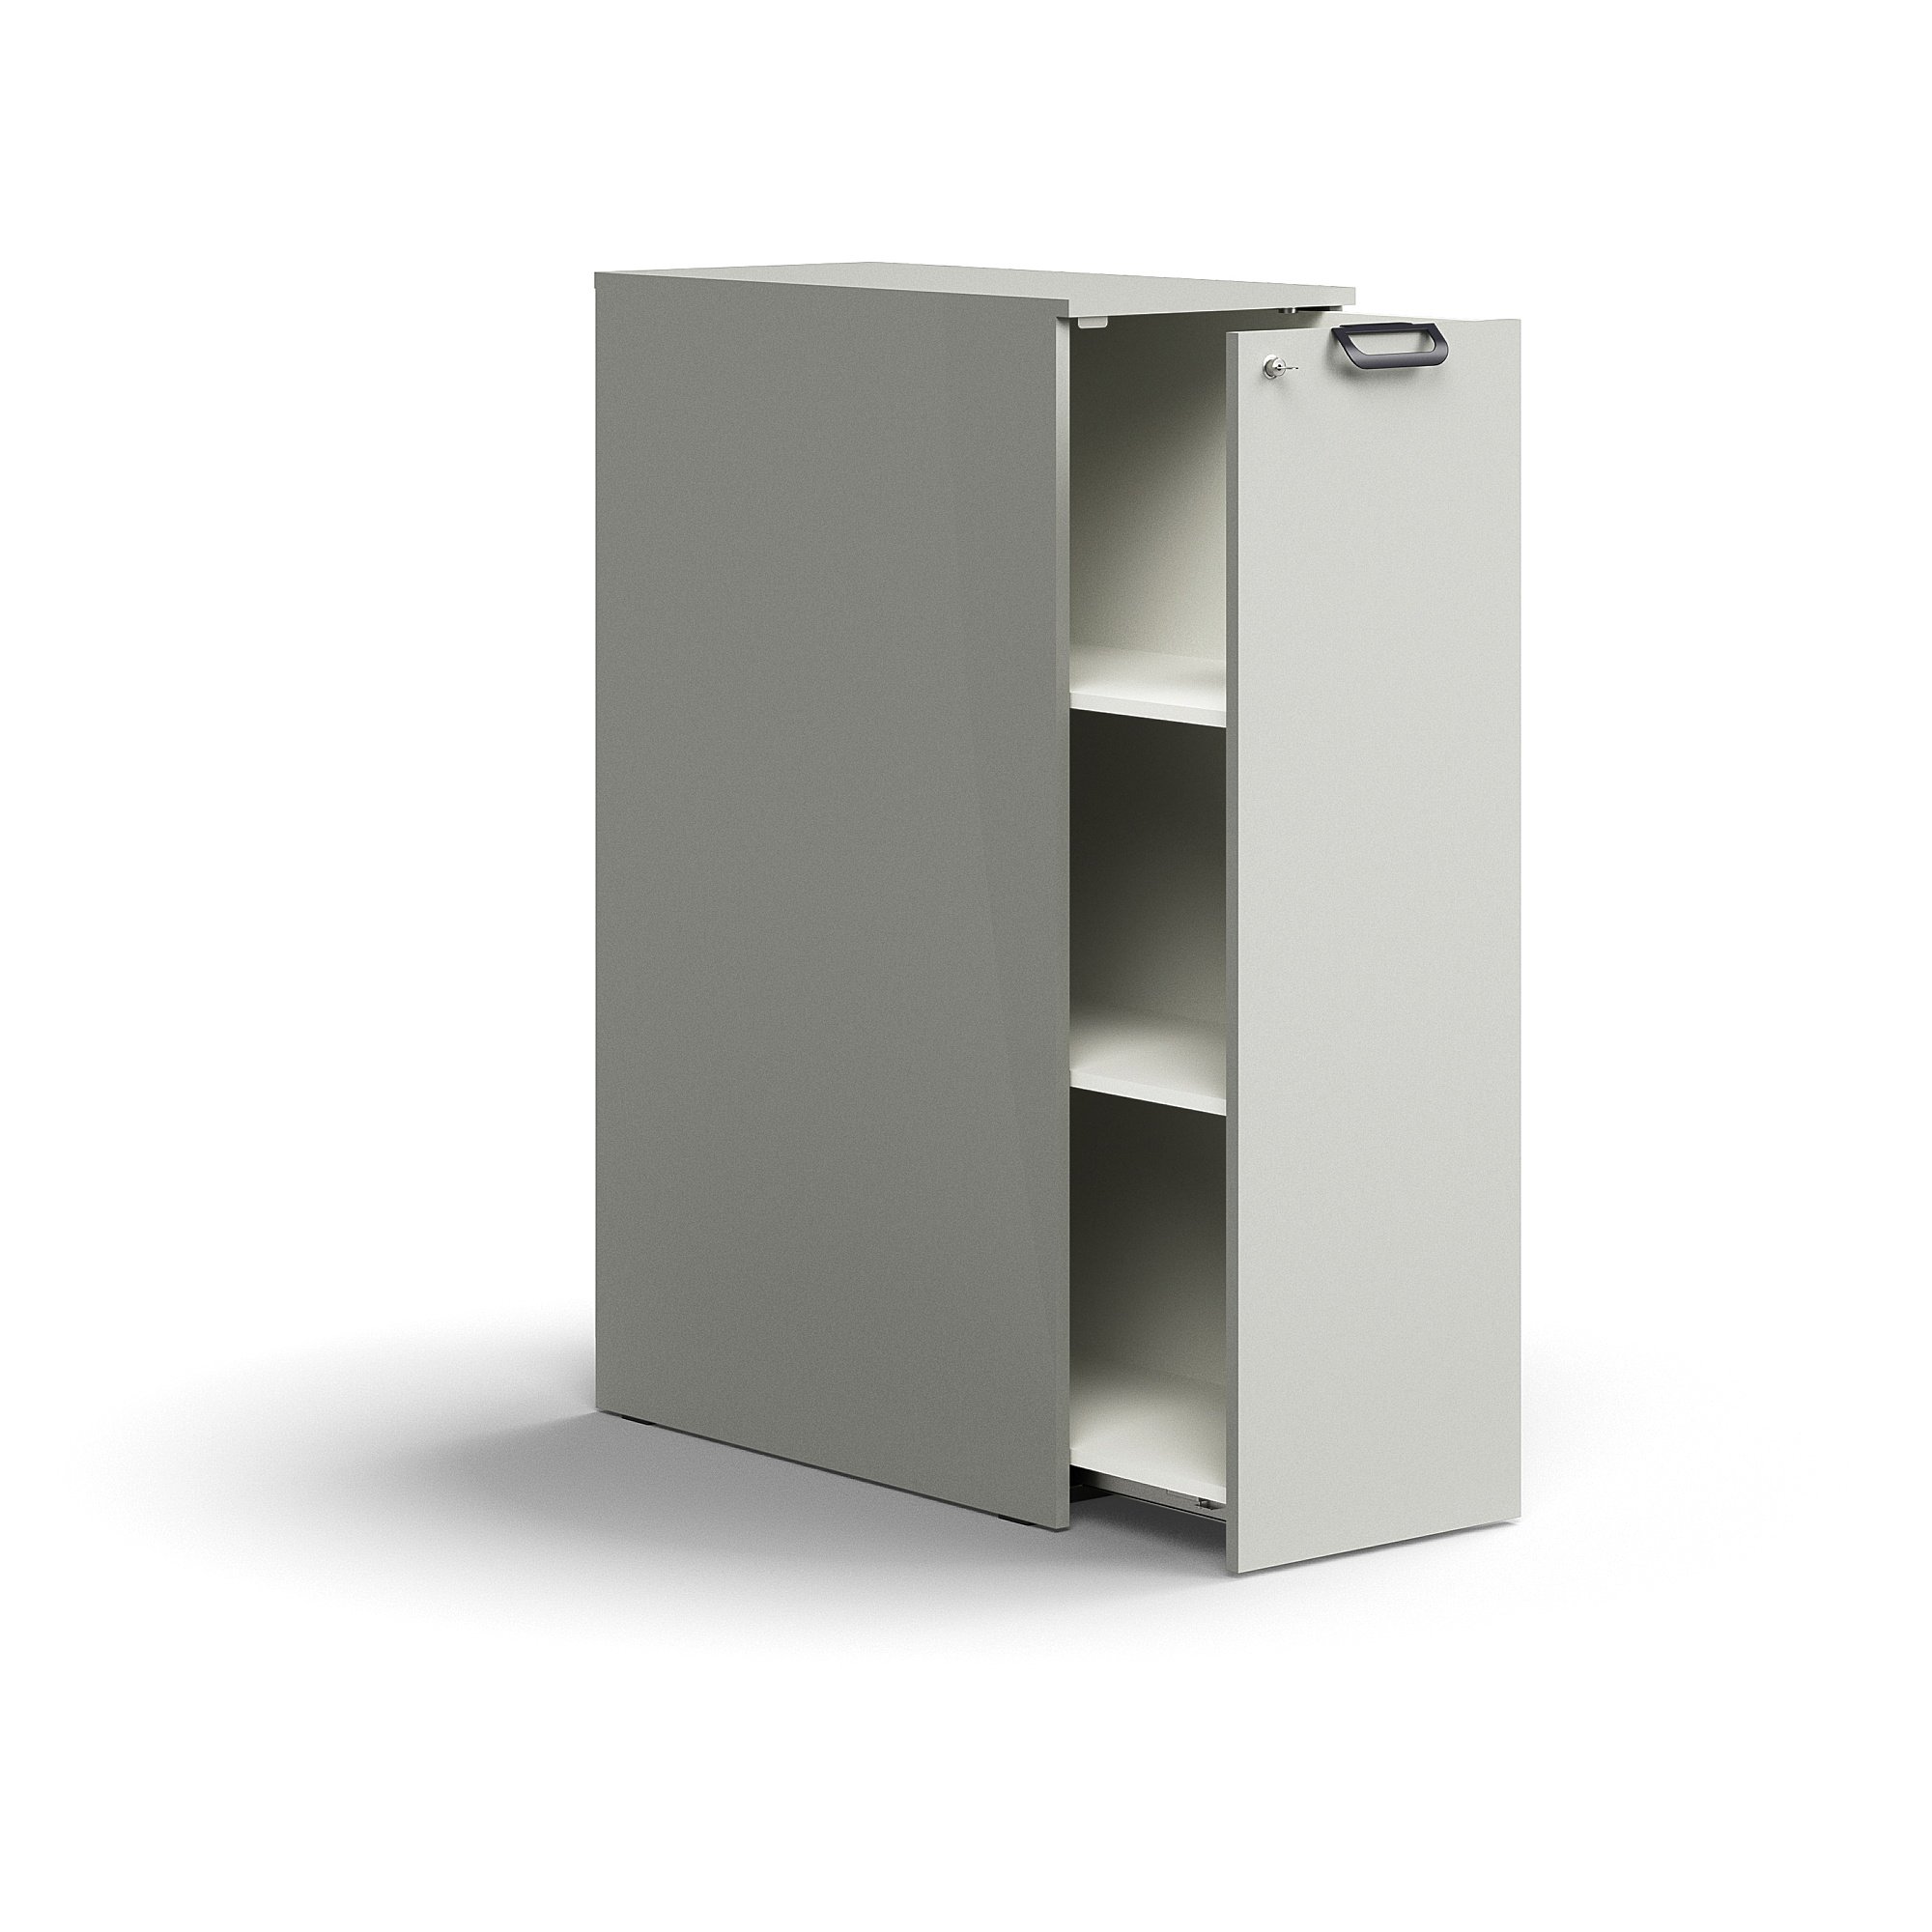 Výsuvná skříňka QBUS, pravá, s úchytkou, 1250x400x800 mm, světle šedá